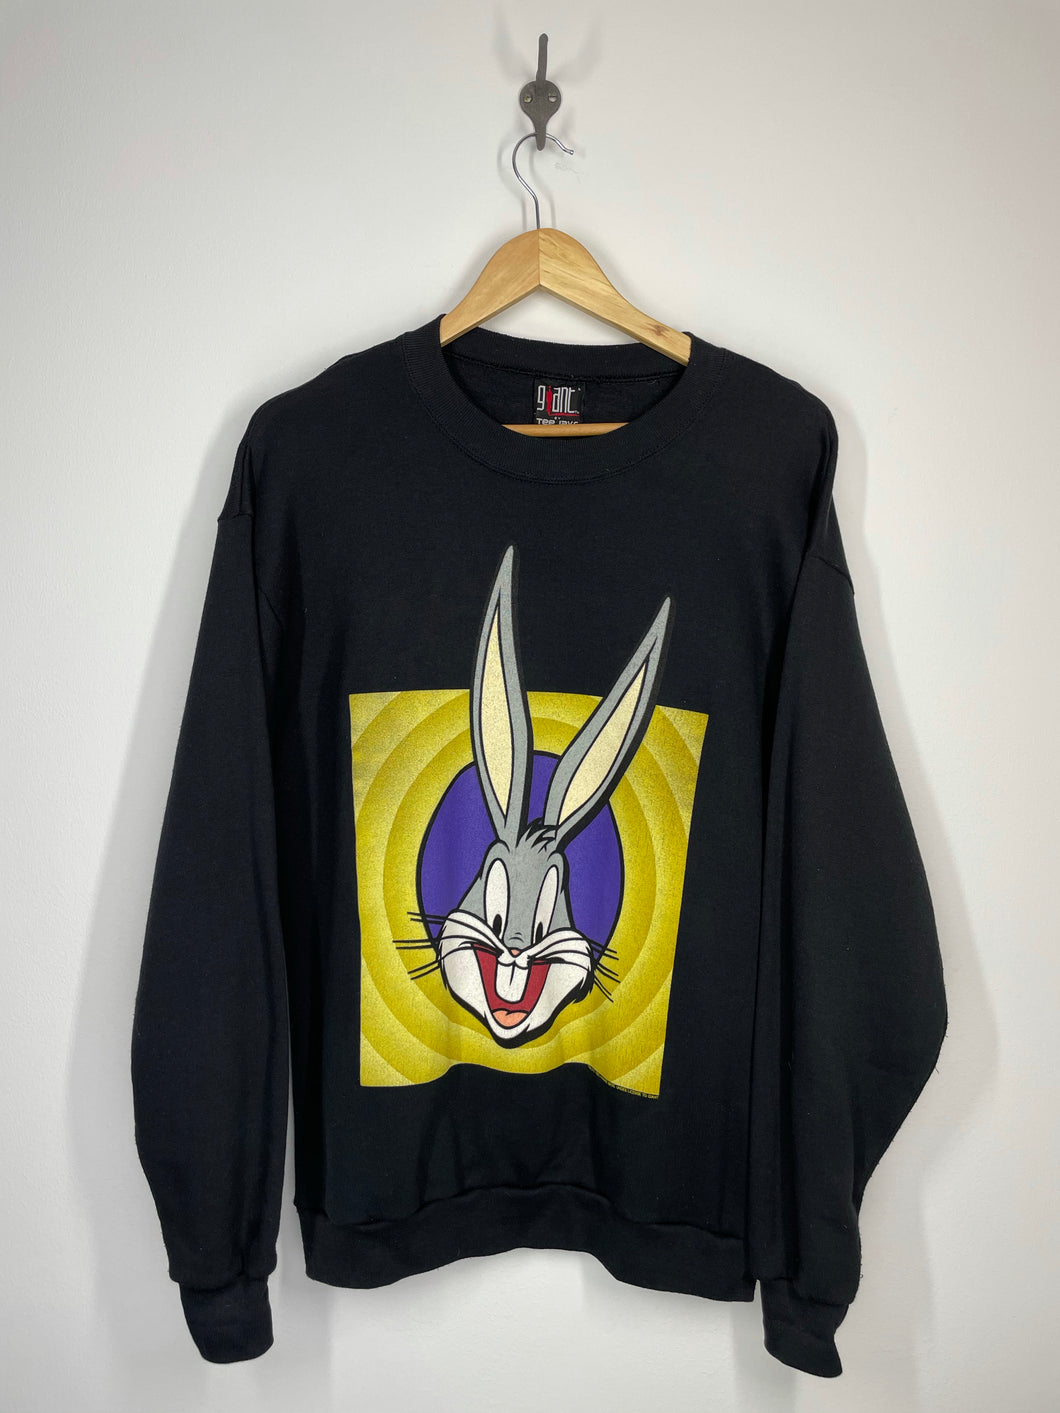 Looney Tunes - 1995 Warner Brothers Bugs Bunny Crewneck Sweatshirt - Giant - L